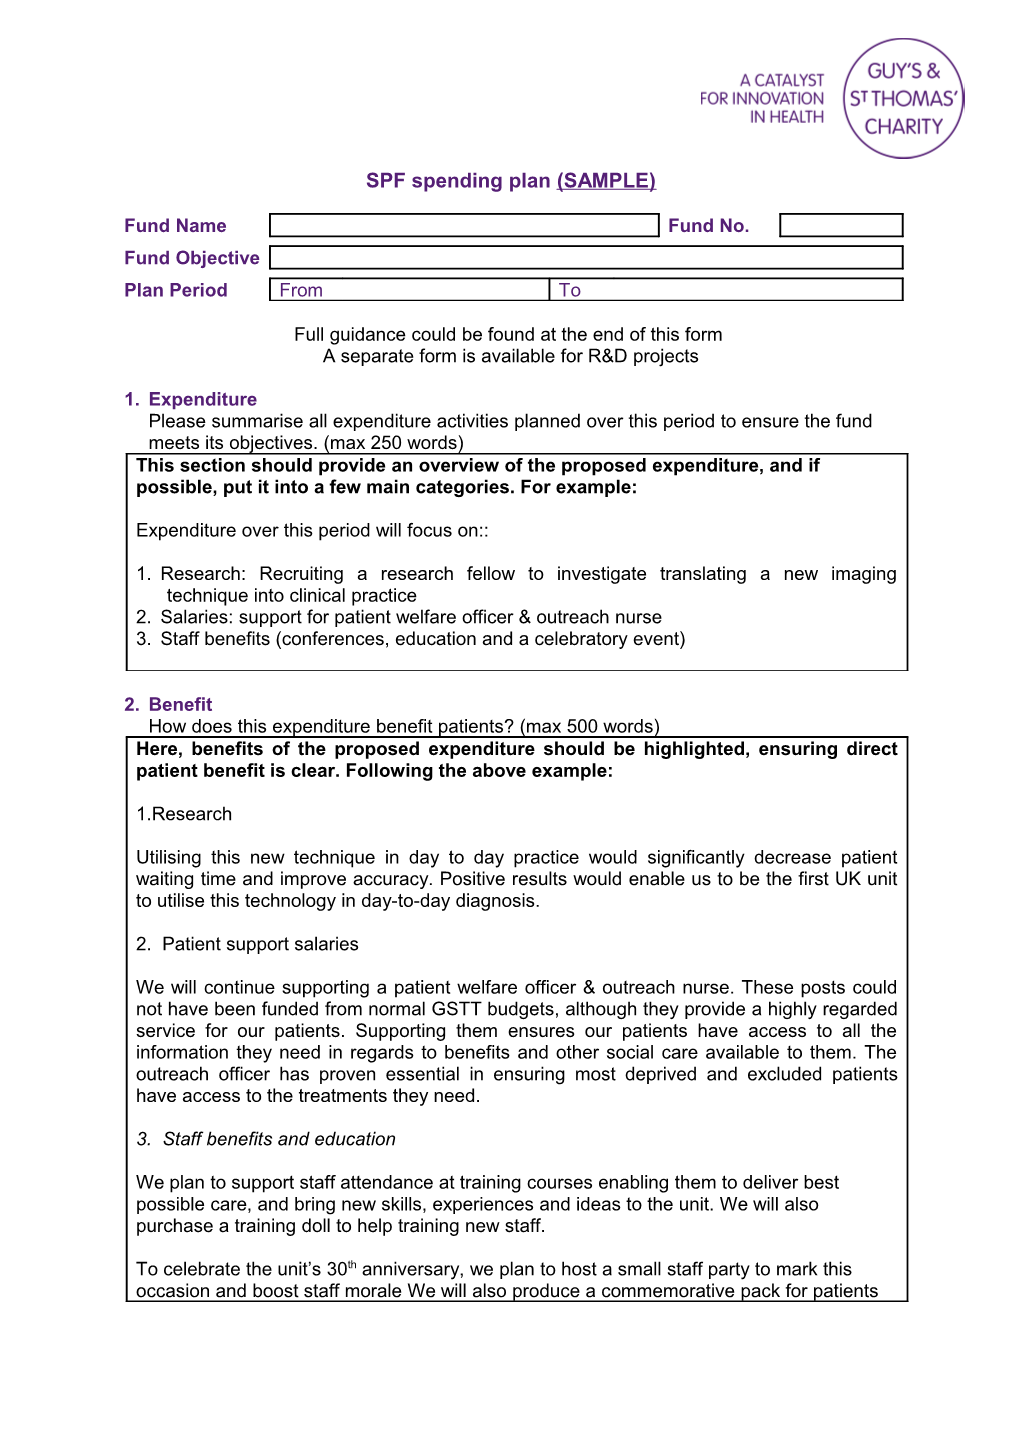 SPF Spending Plan Form (General)